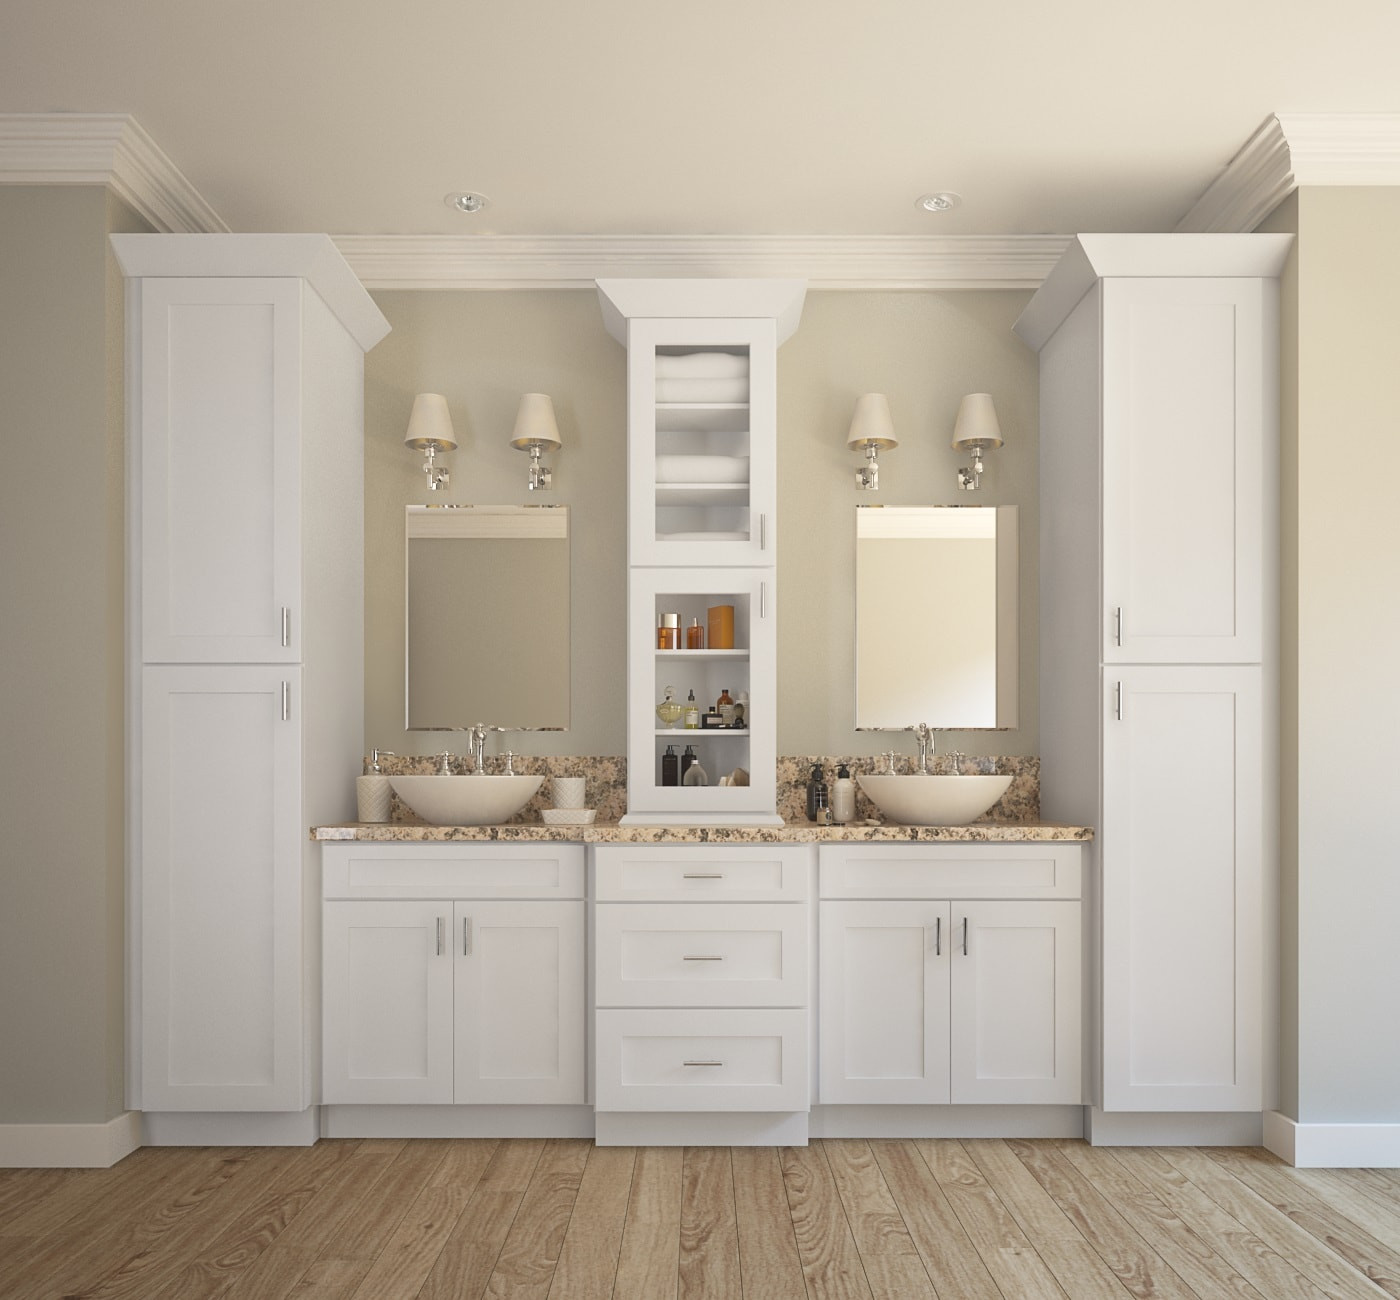 Cabinets To Go Bathroom Vanities
 Aspen White Shaker Ready to Assemble Bathroom Vanities